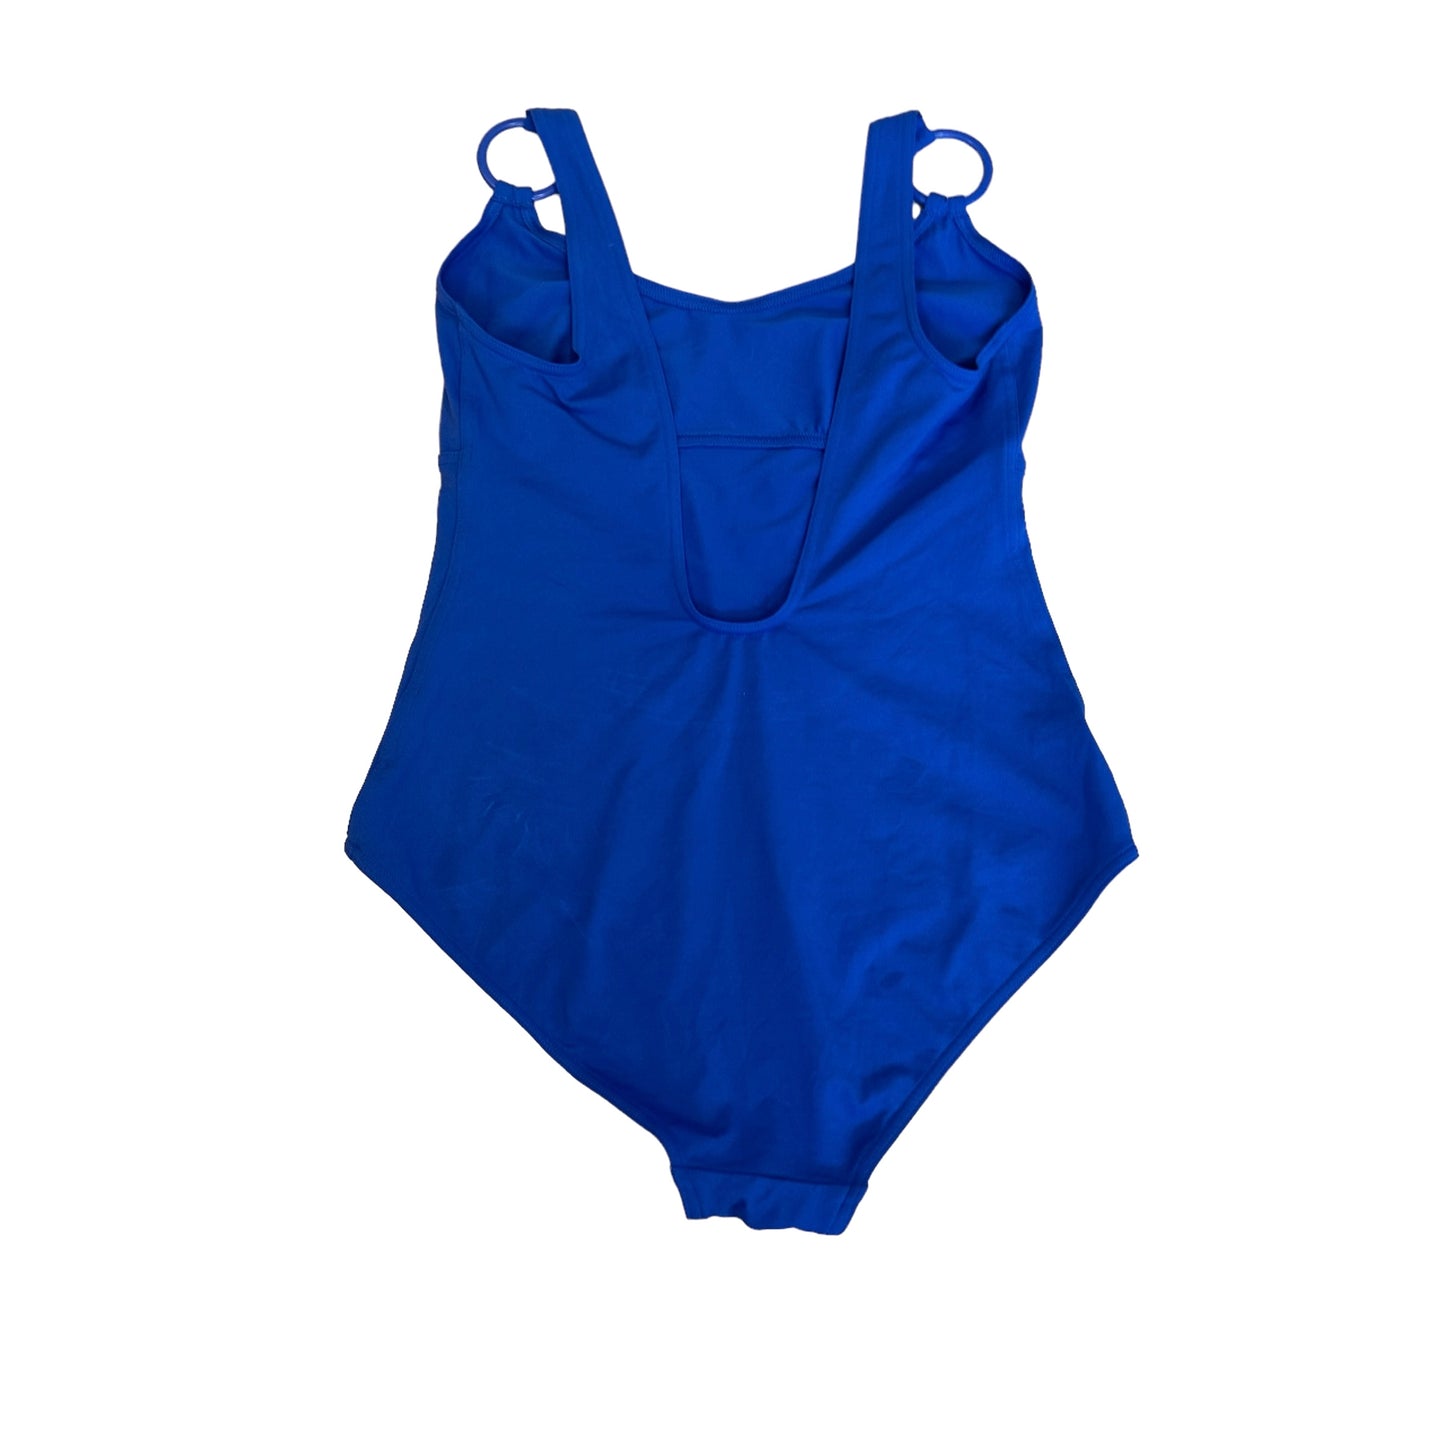 Blue One-Piece Swimsuit - M